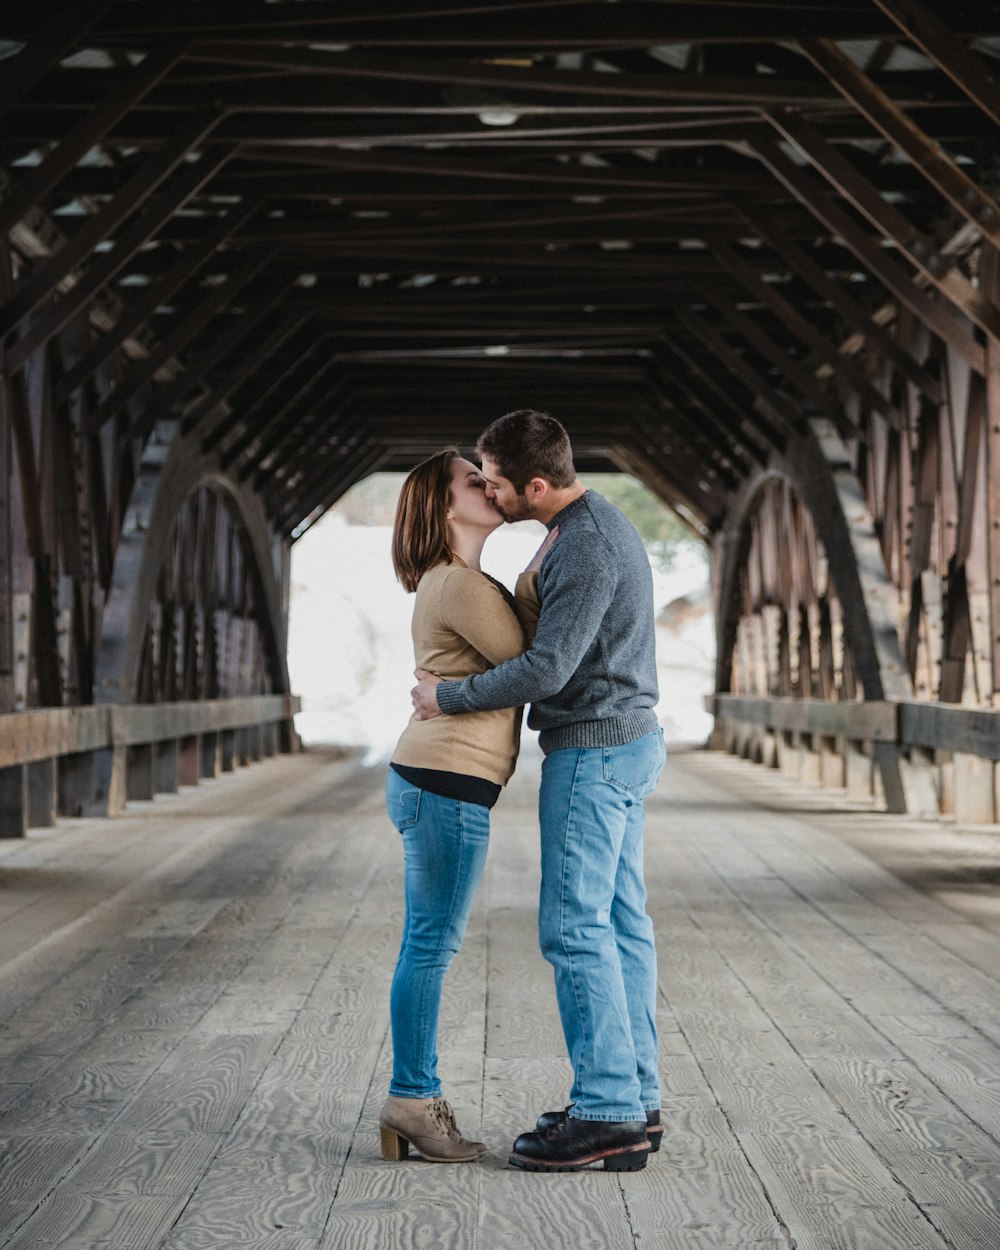 homme et femme s’embrassent dans le pont